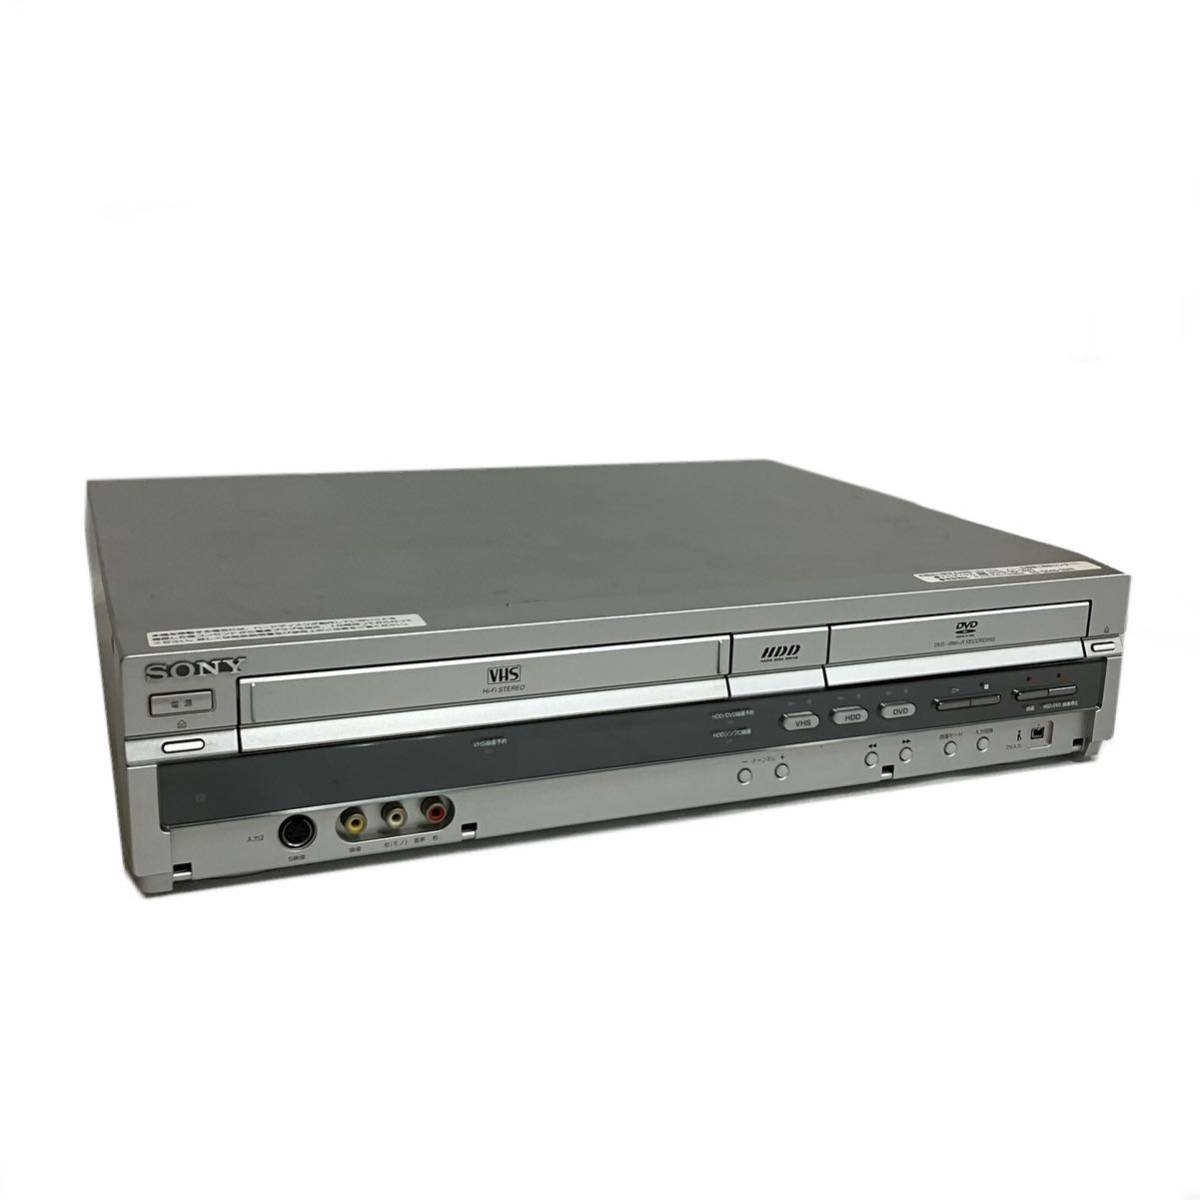 SONY スゴ録 RDR-VH85 VHS/HDD/DVD 一体型レコーダー 2006年製 ソニー